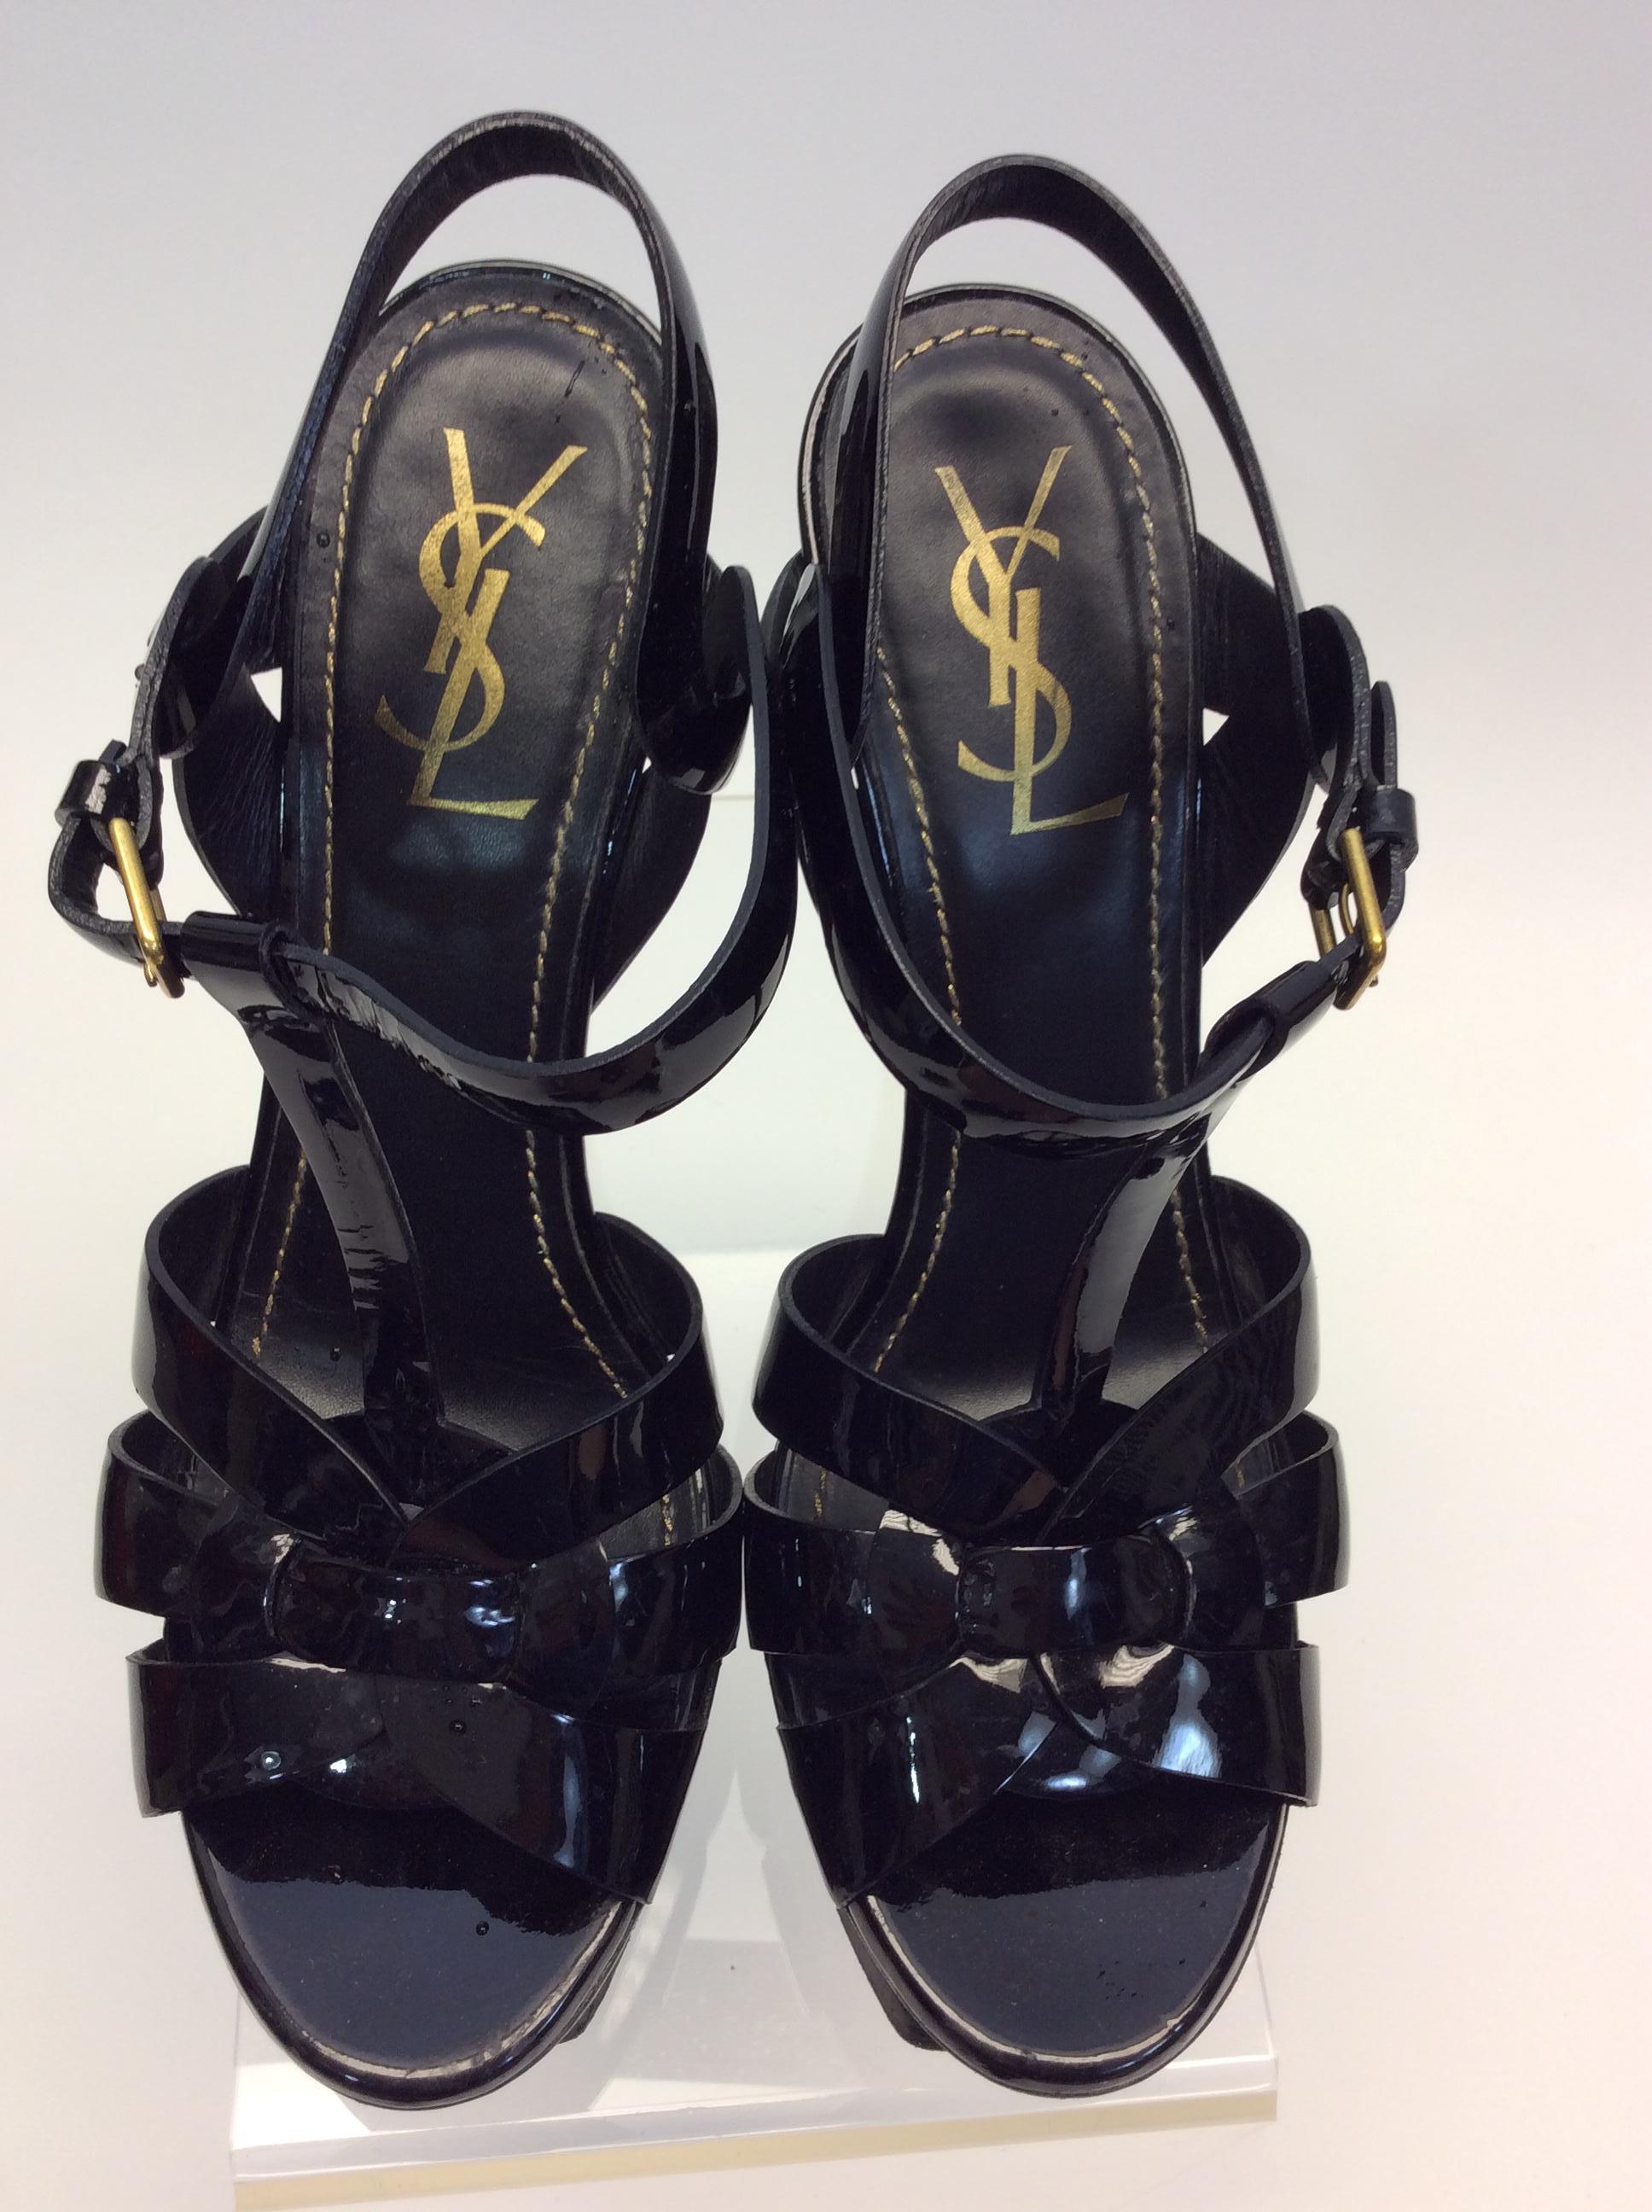 Yves Saint Laurent Black Patent Leather Tribute Heels For Sale 1